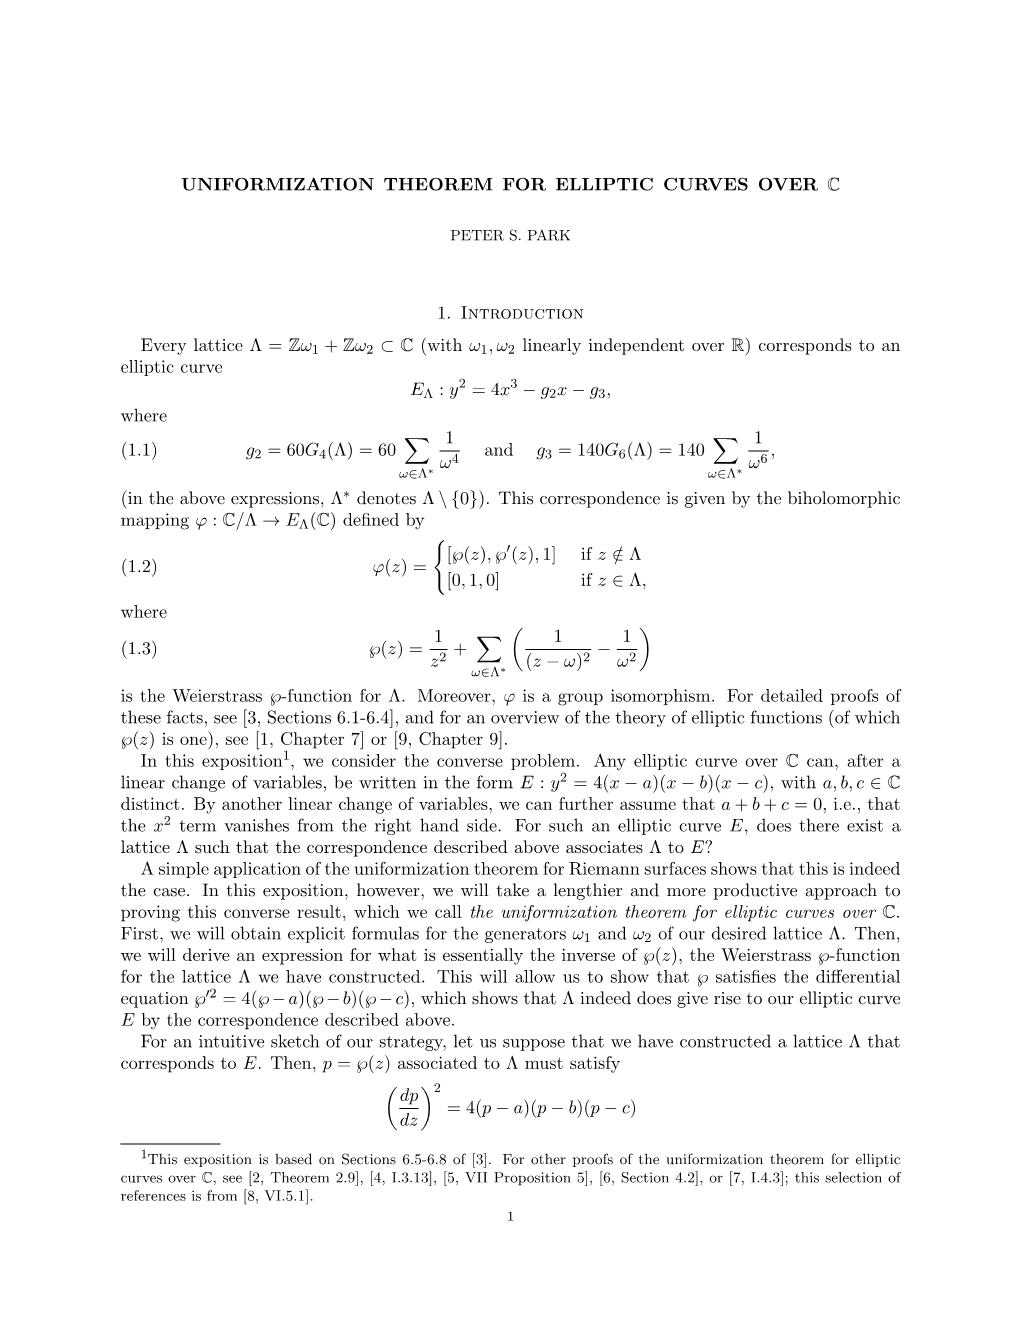 Uniformization Theorem for Elliptic Curves Over C